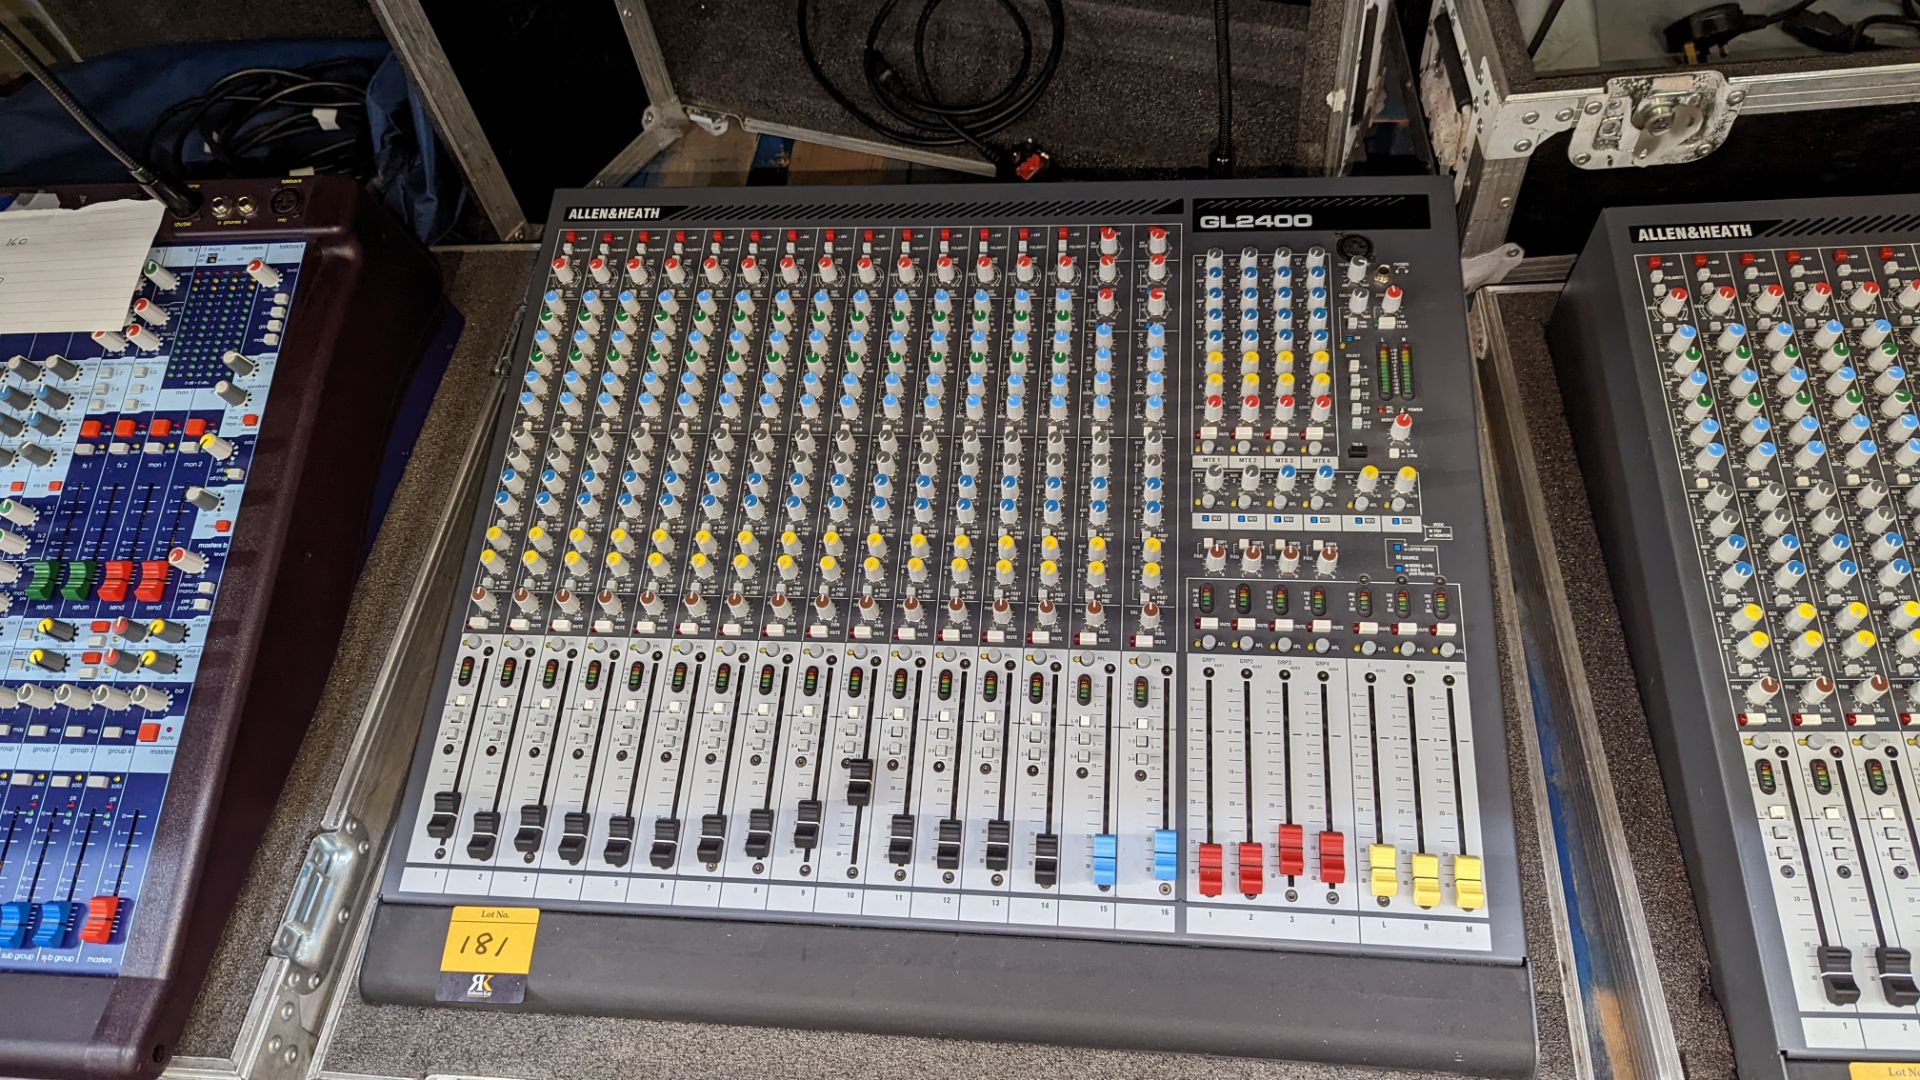 Allen & Heath audio mixing desk model GL2400, 16 channel, 4 Group, including light, dust cover & fli - Image 6 of 14